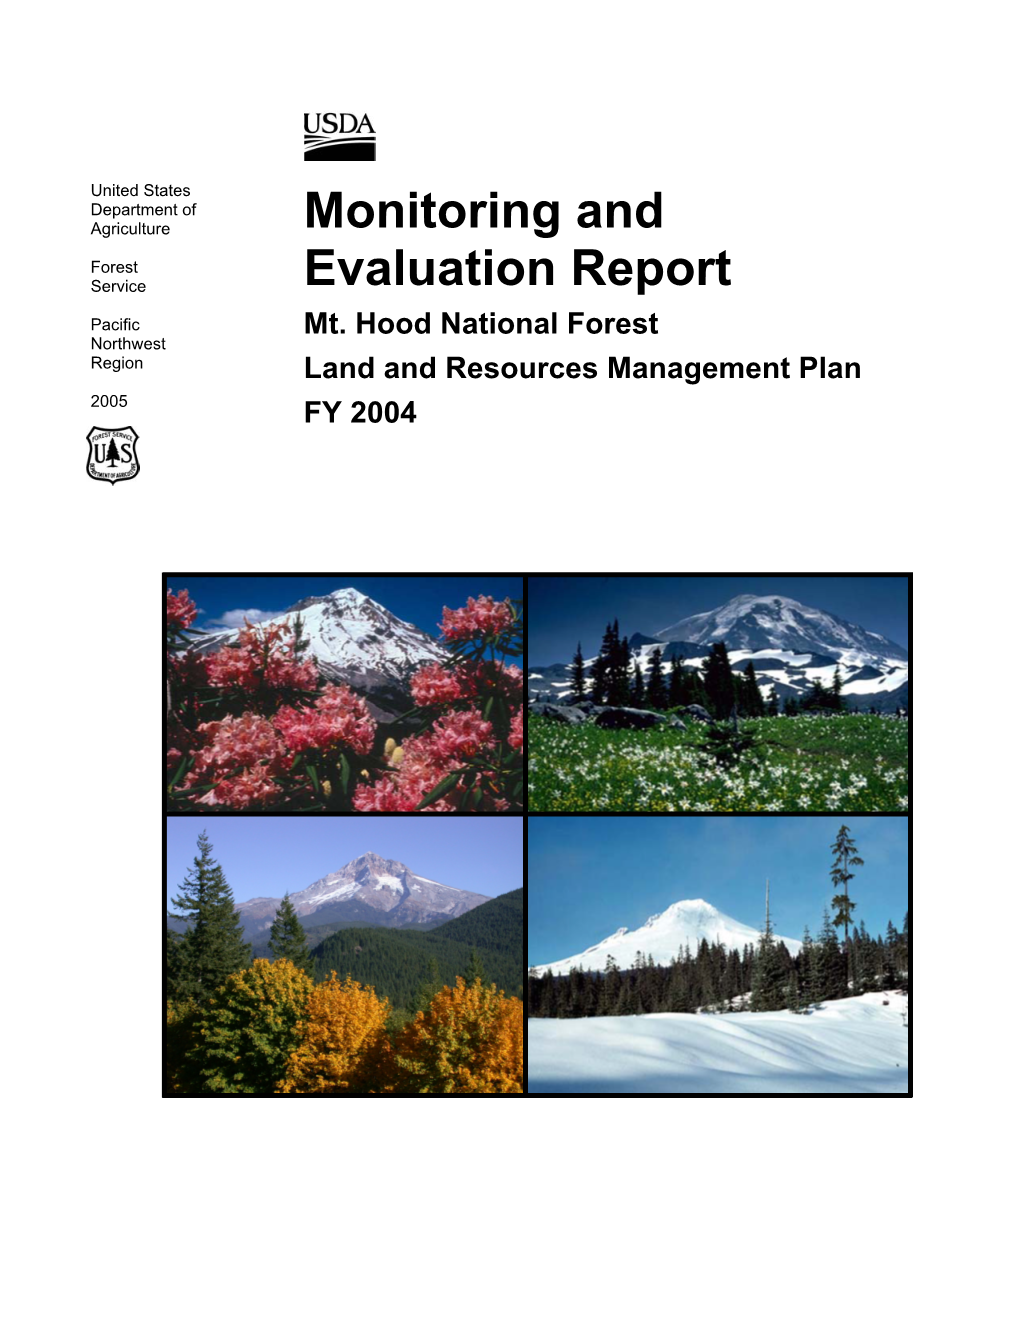 2004 Monitoring Report